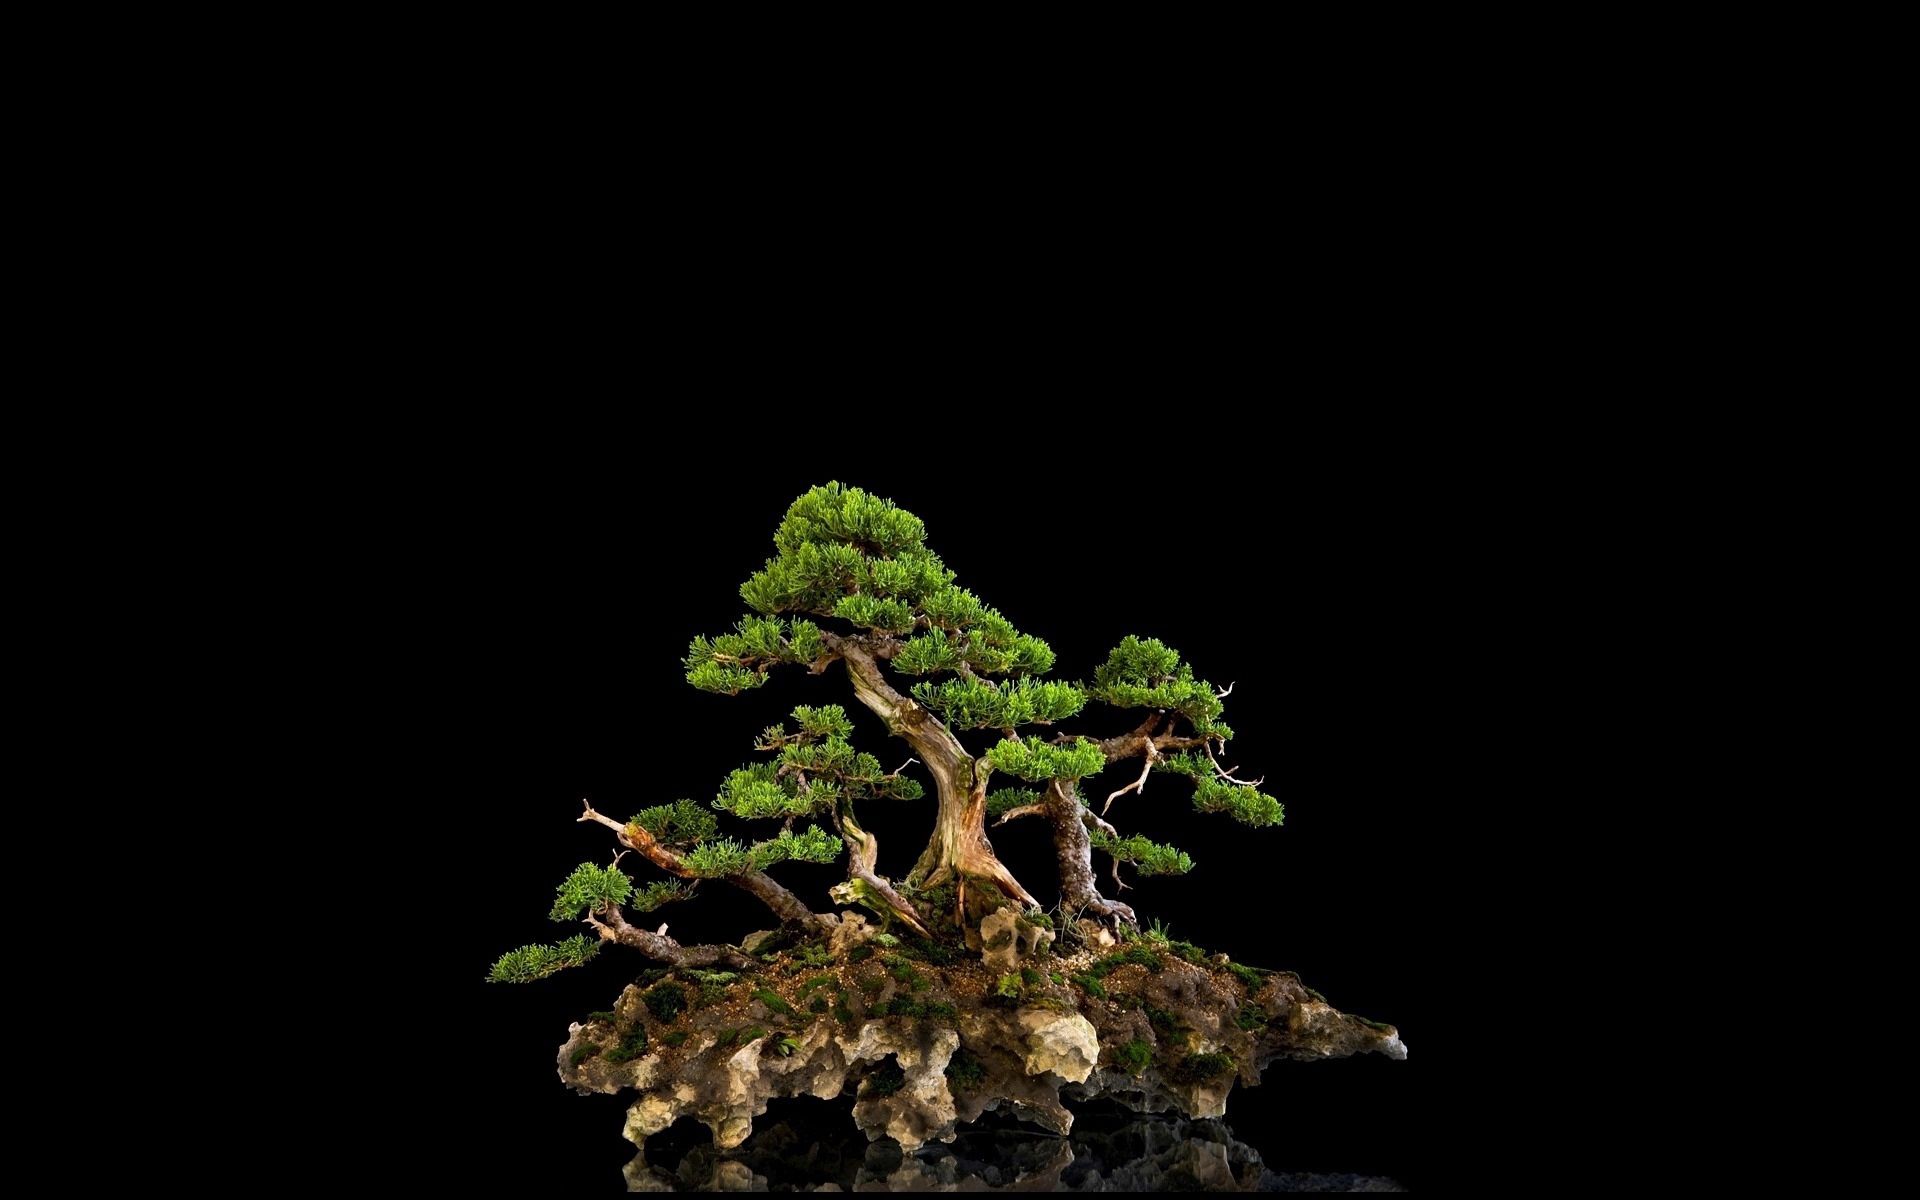 97947 descargar imagen fondo negro, bonsai, naturaleza, madera, árbol, bonsái: fondos de pantalla y protectores de pantalla gratis